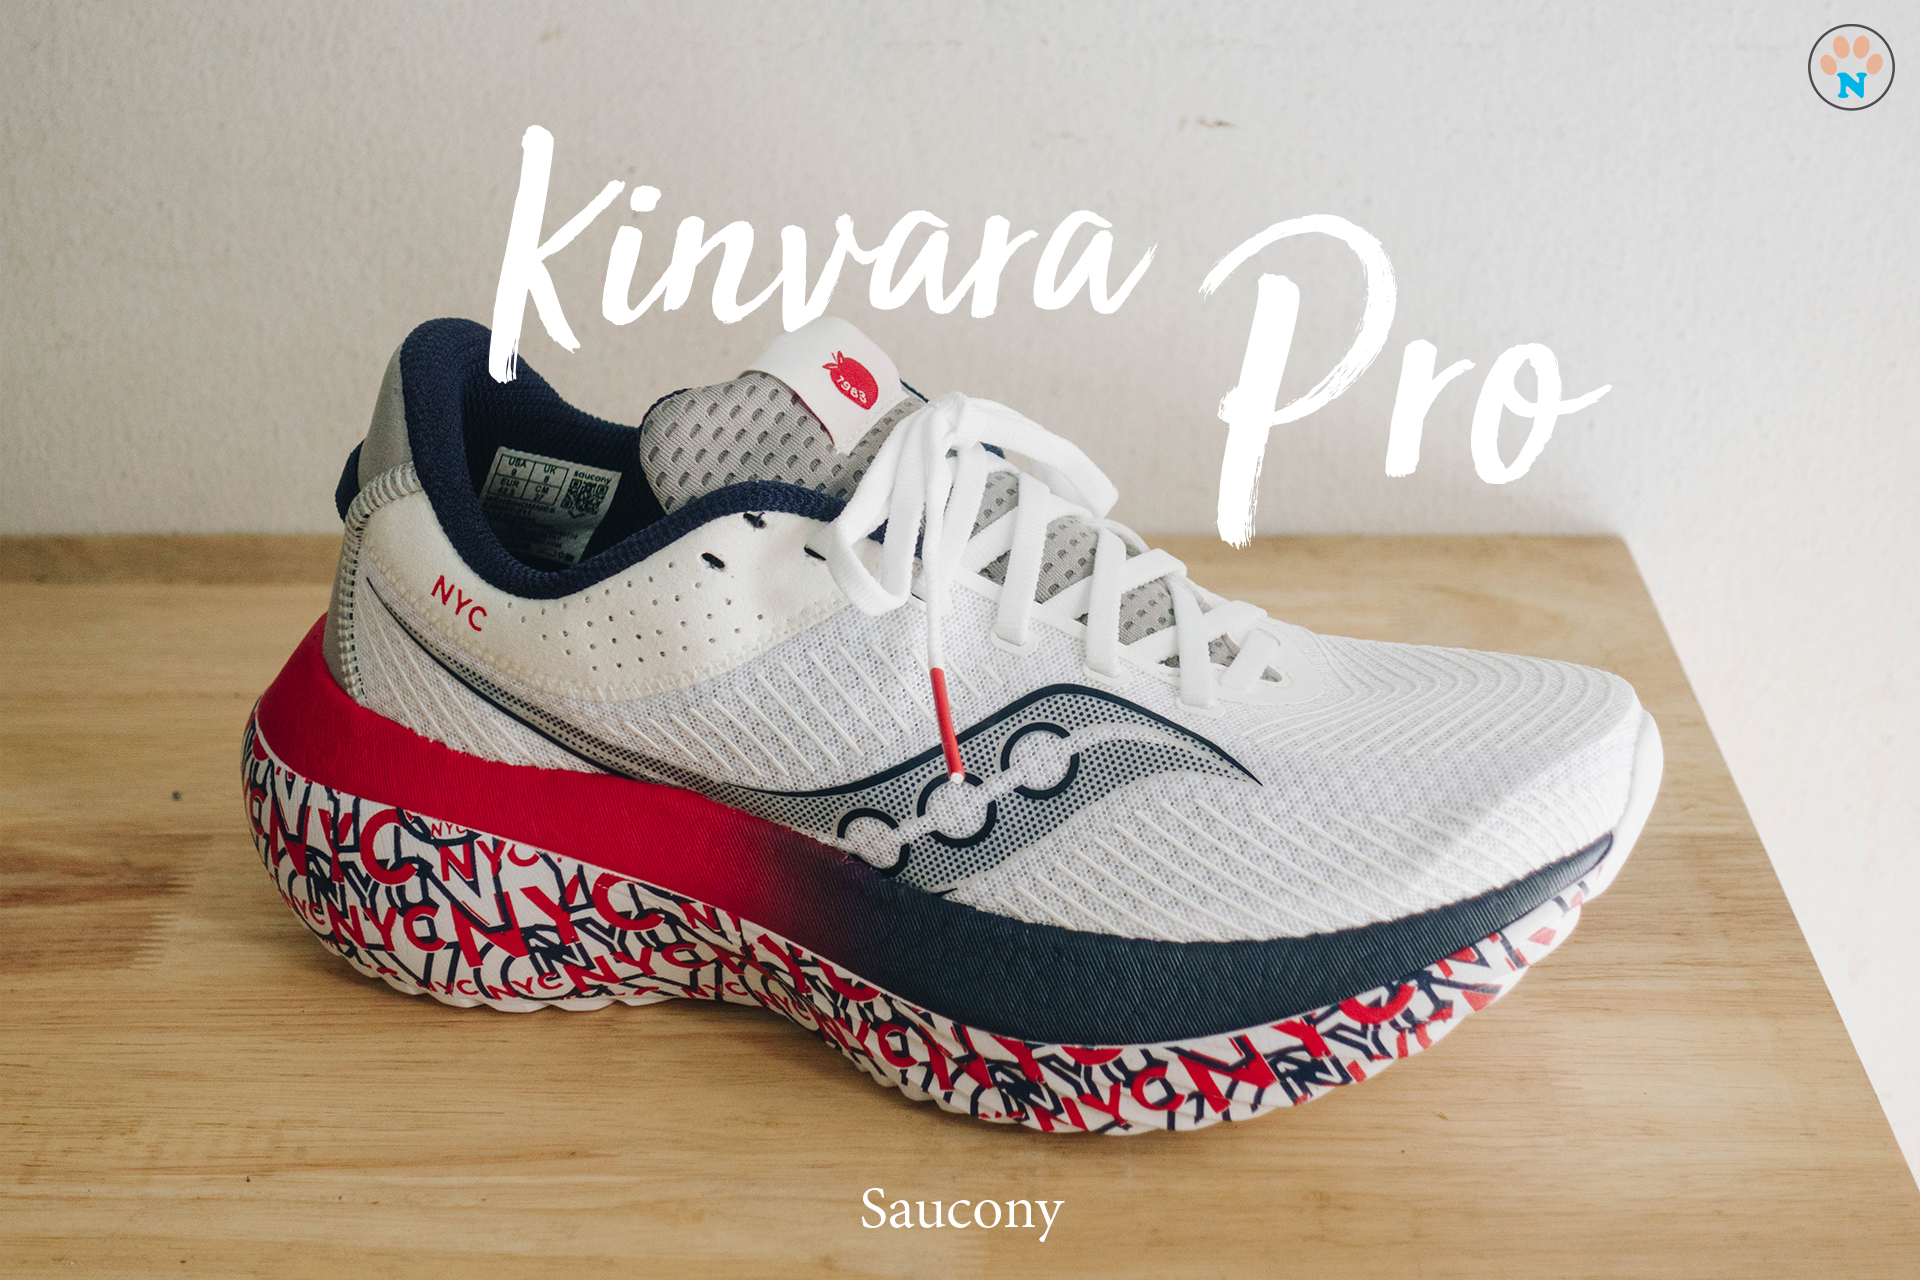 Kinvara Pro ชื่อเดิมยุคใหม่ โฟมแน่น กลิ้ง แต่หนัก